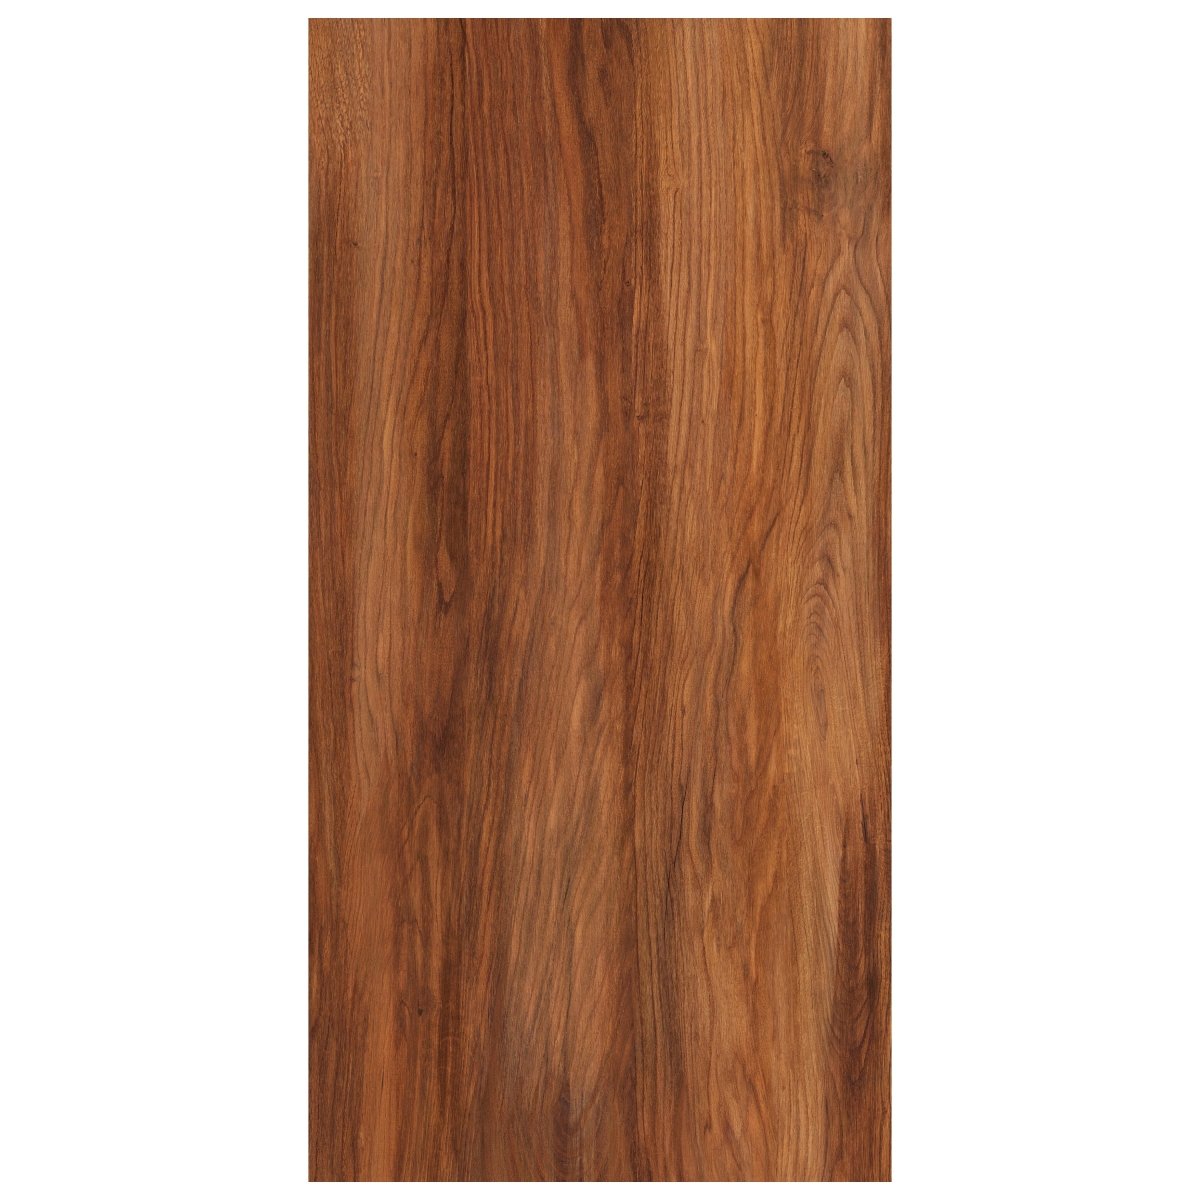 Türtapete Holz Muster, Maserung, Braun, Massiv M1234 - Bild 2